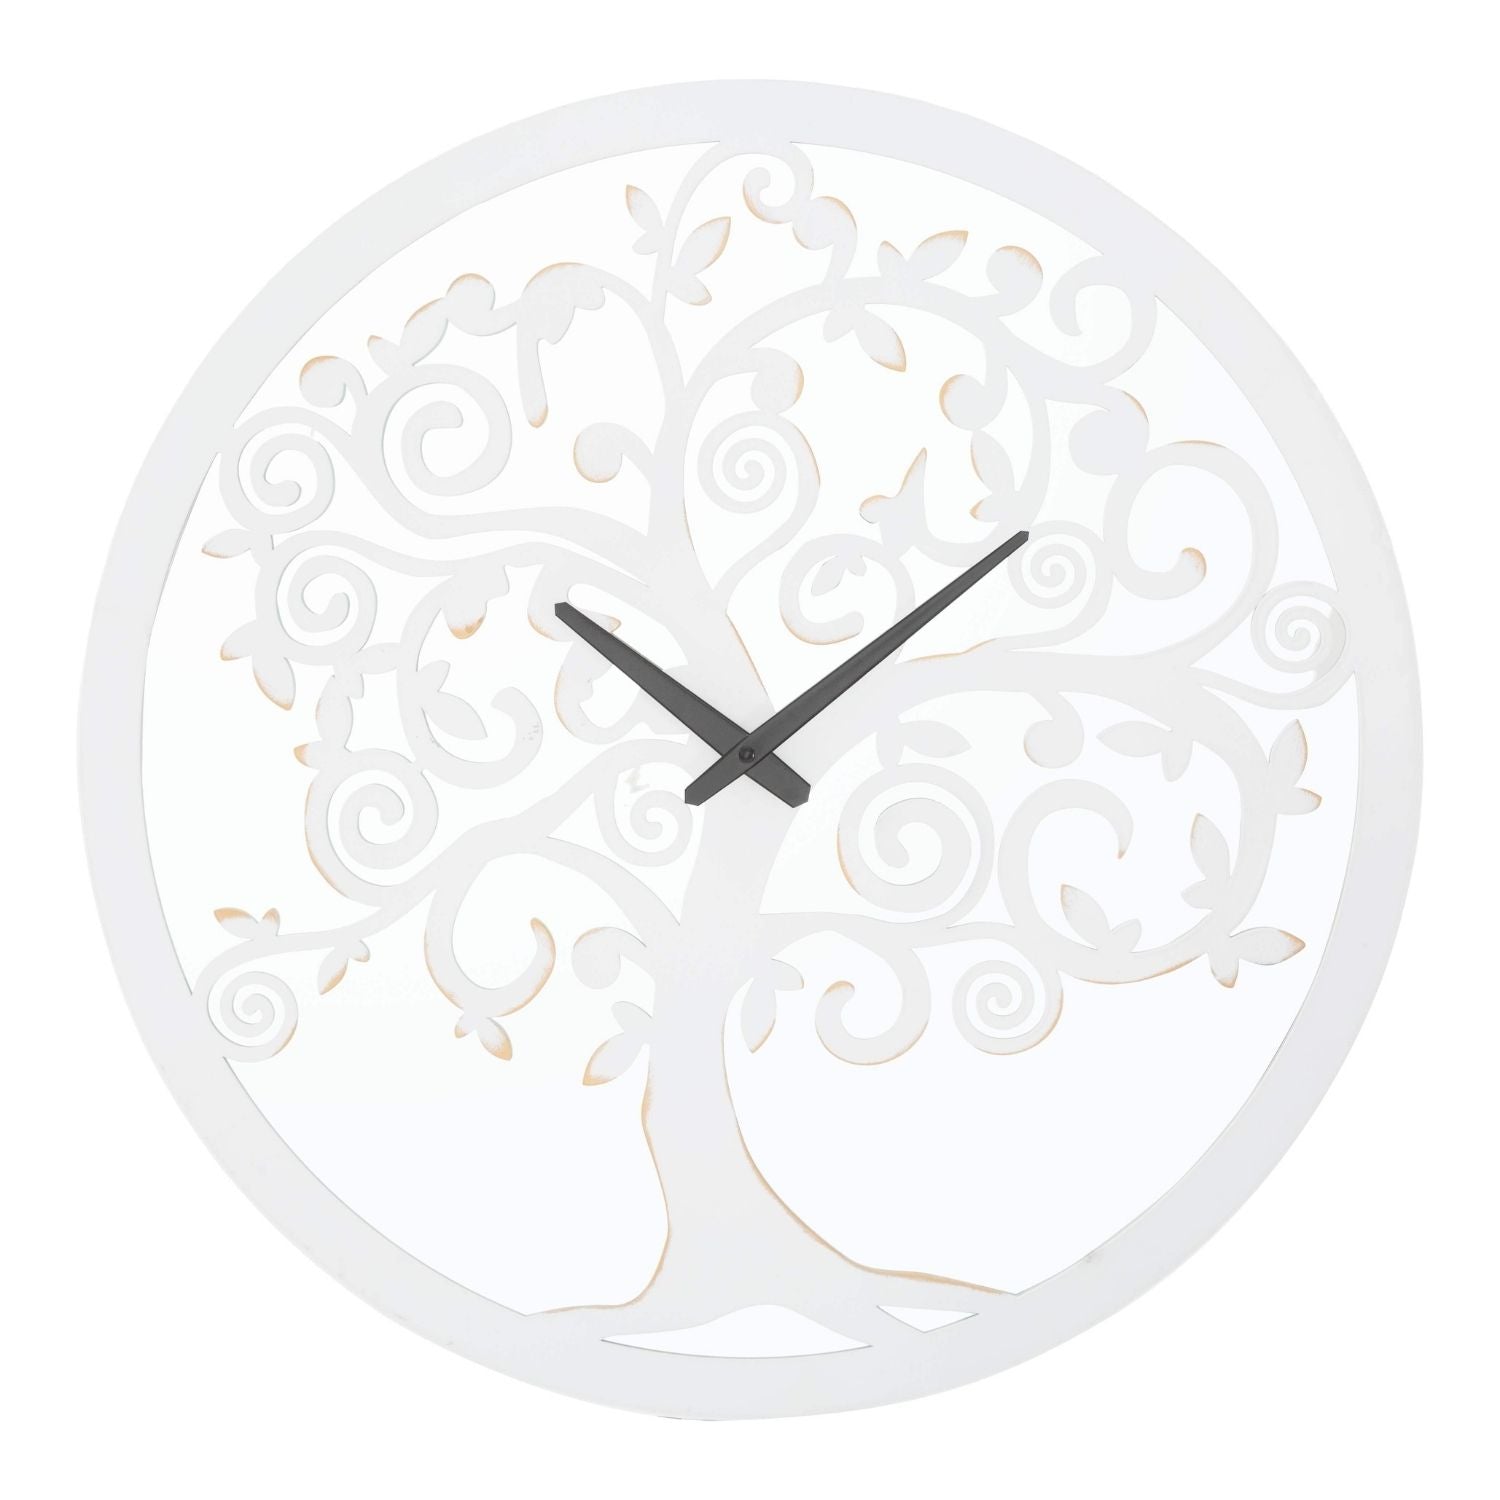 Reloj de pared TREE blanco en mdf.